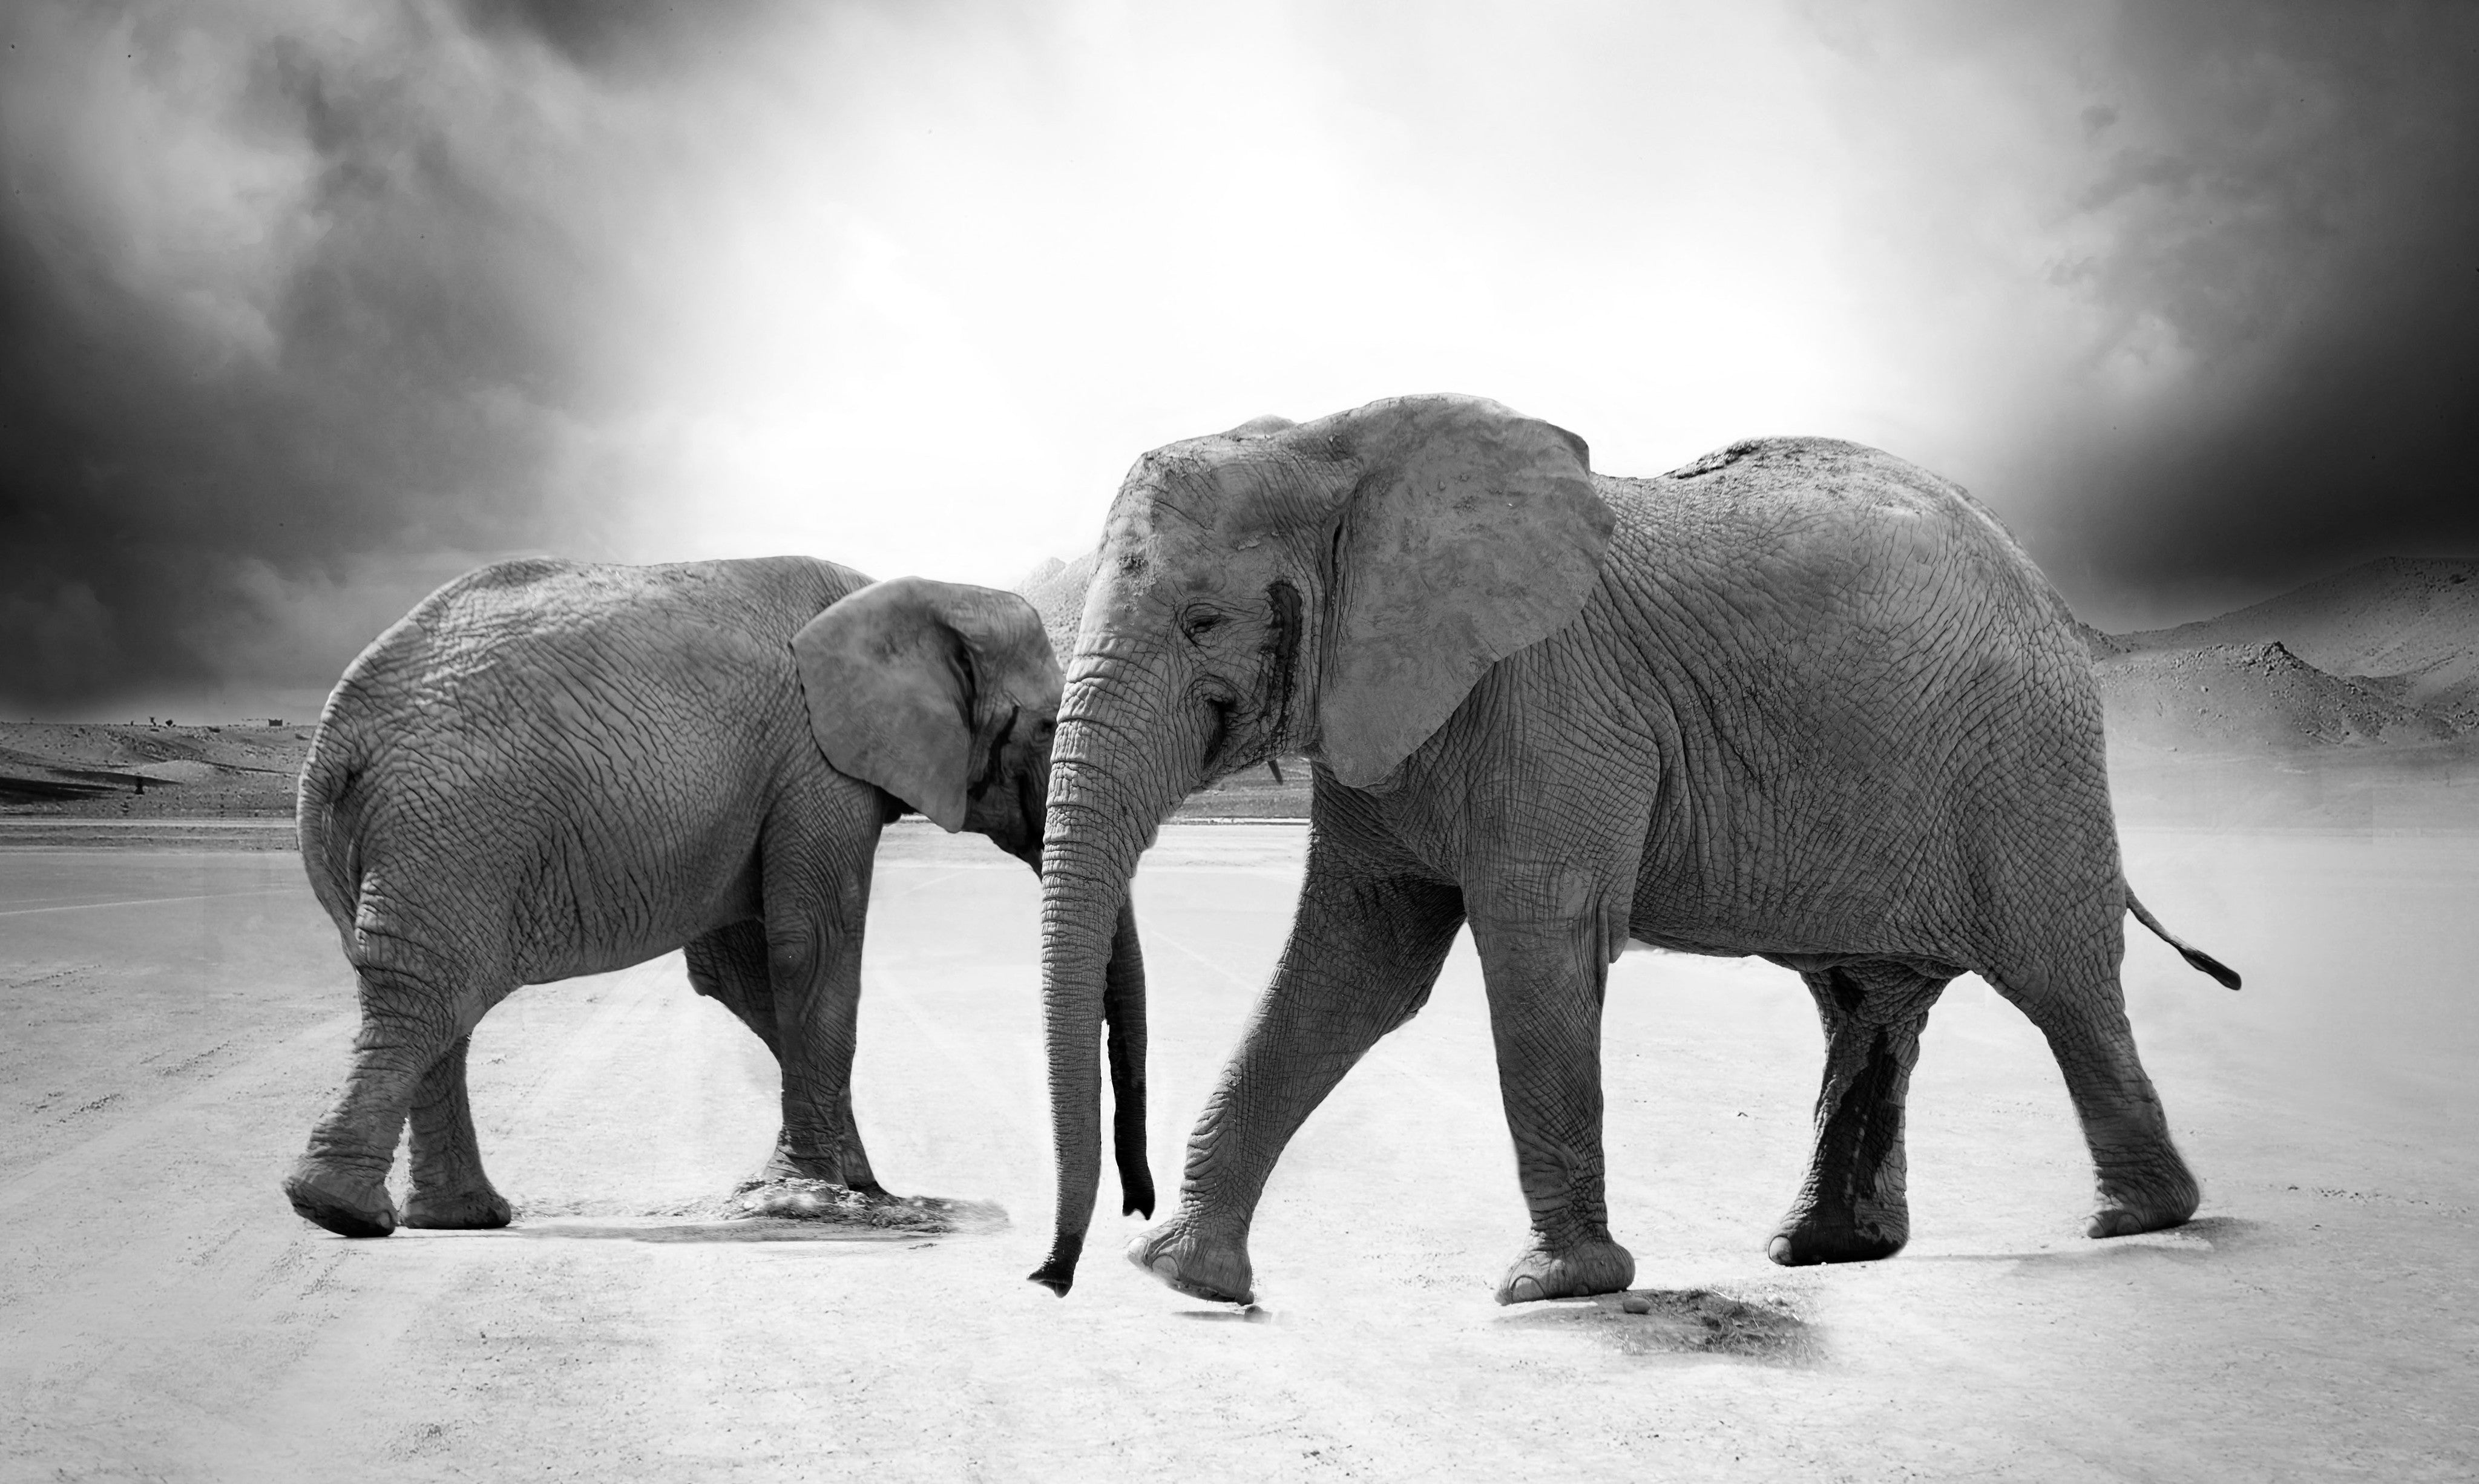 Black and white elephants